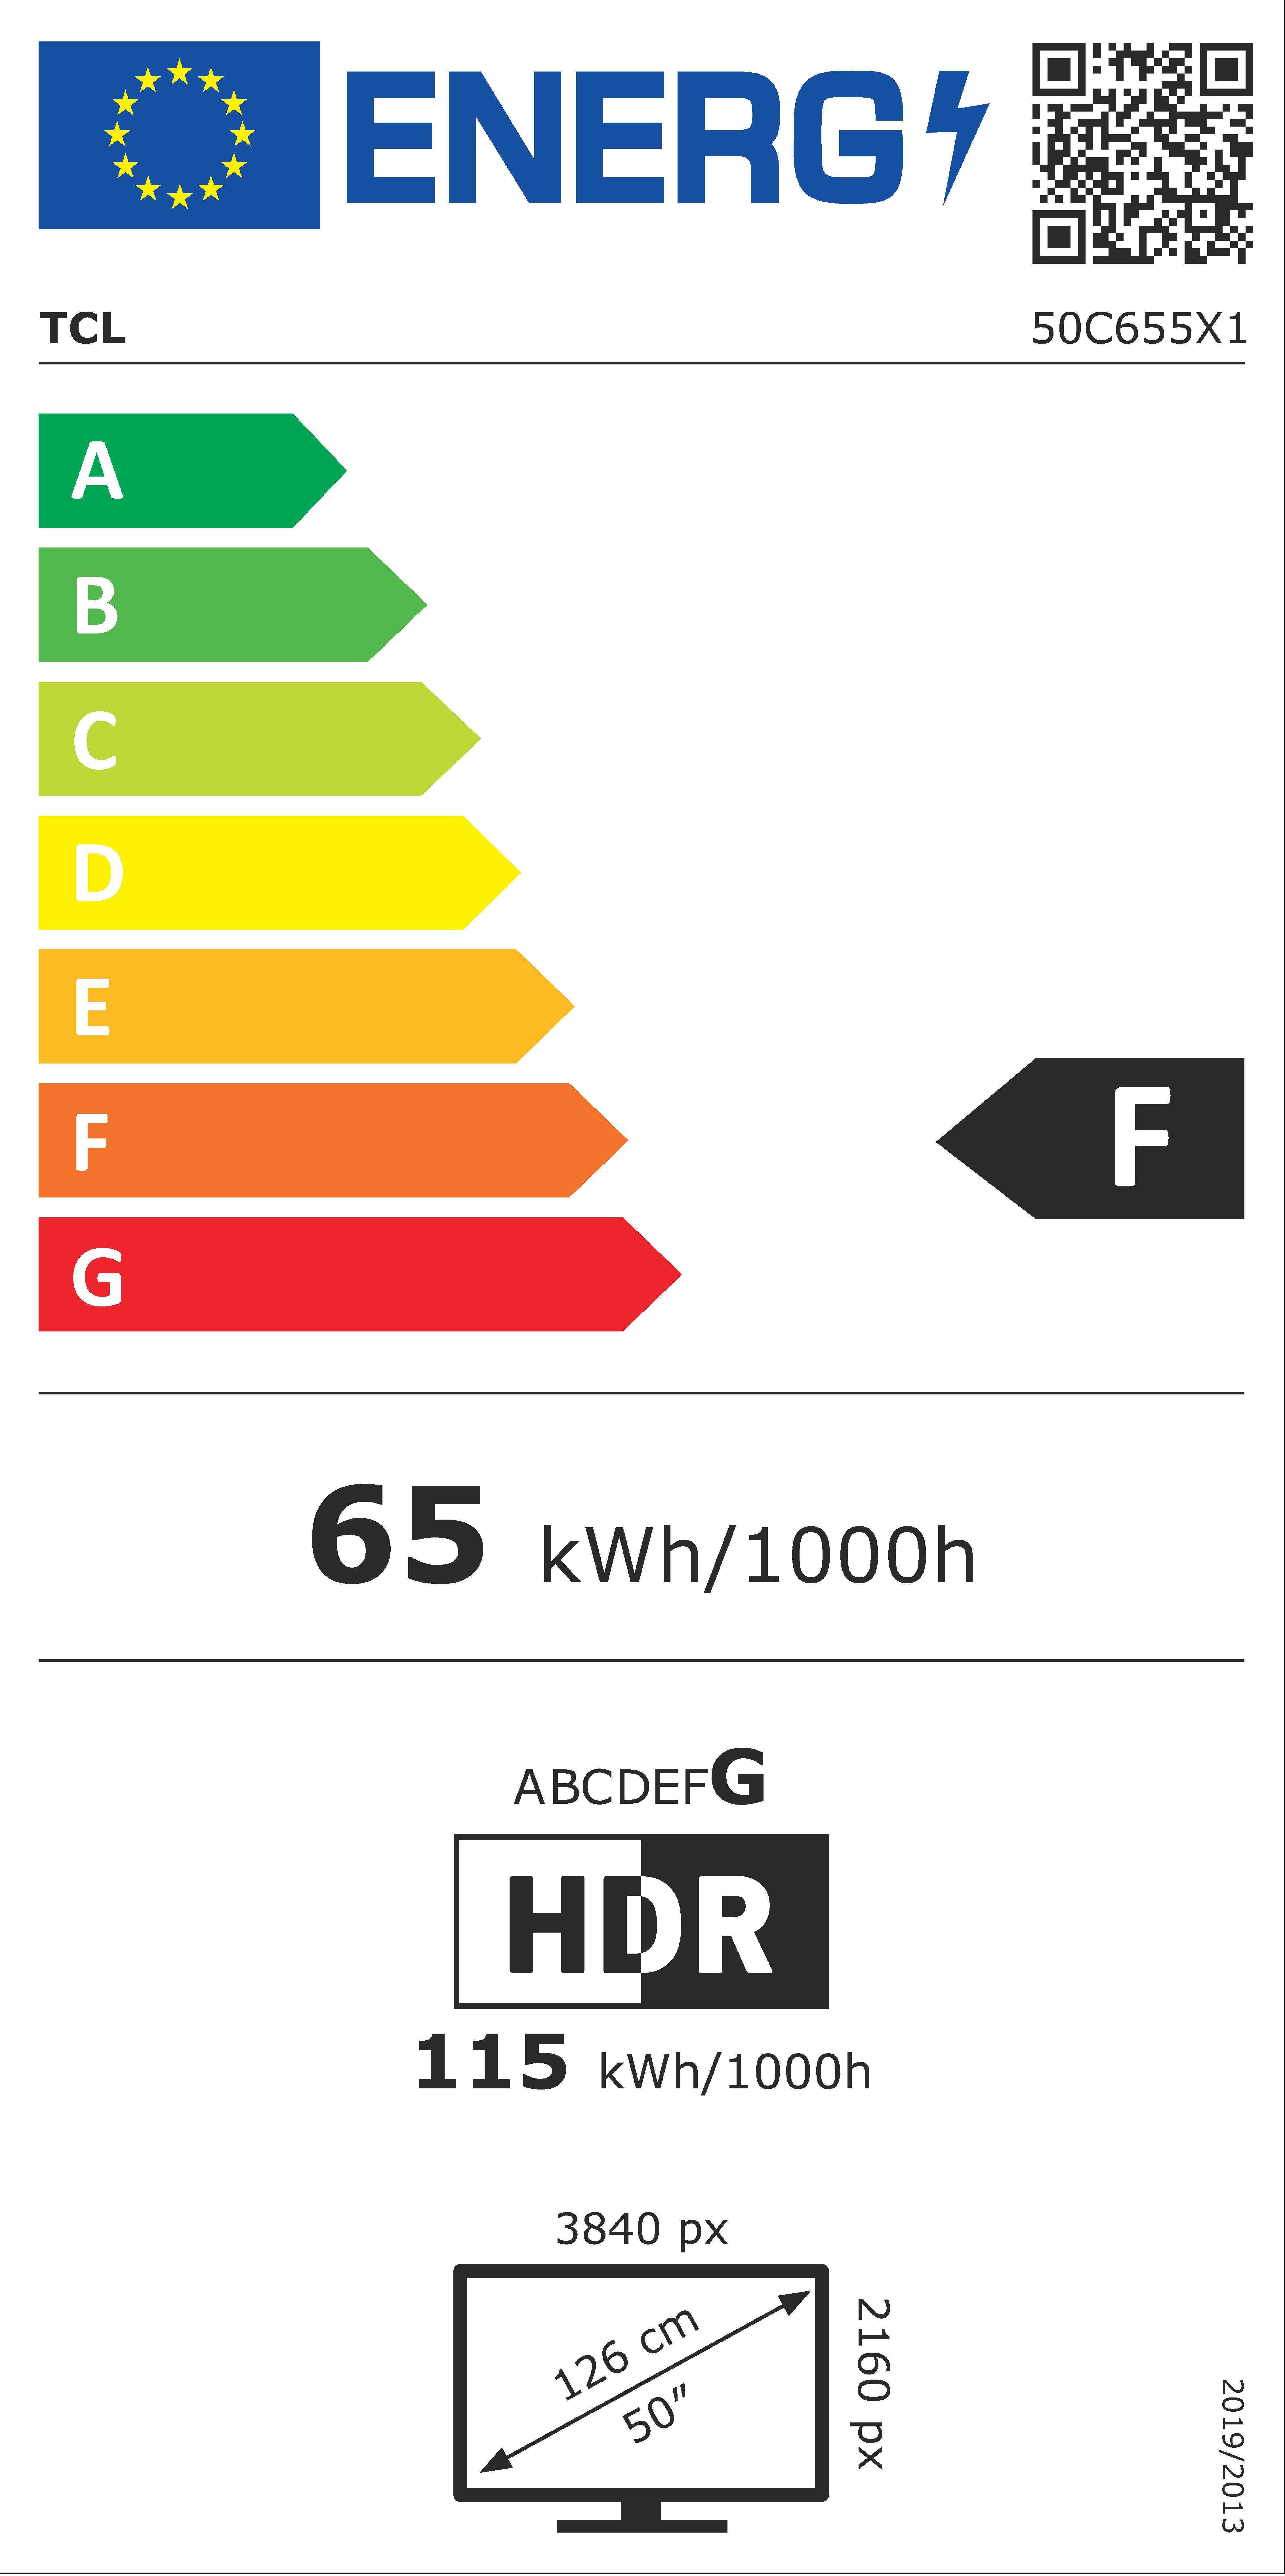 Etiqueta de Eficiencia Energética - 50C655